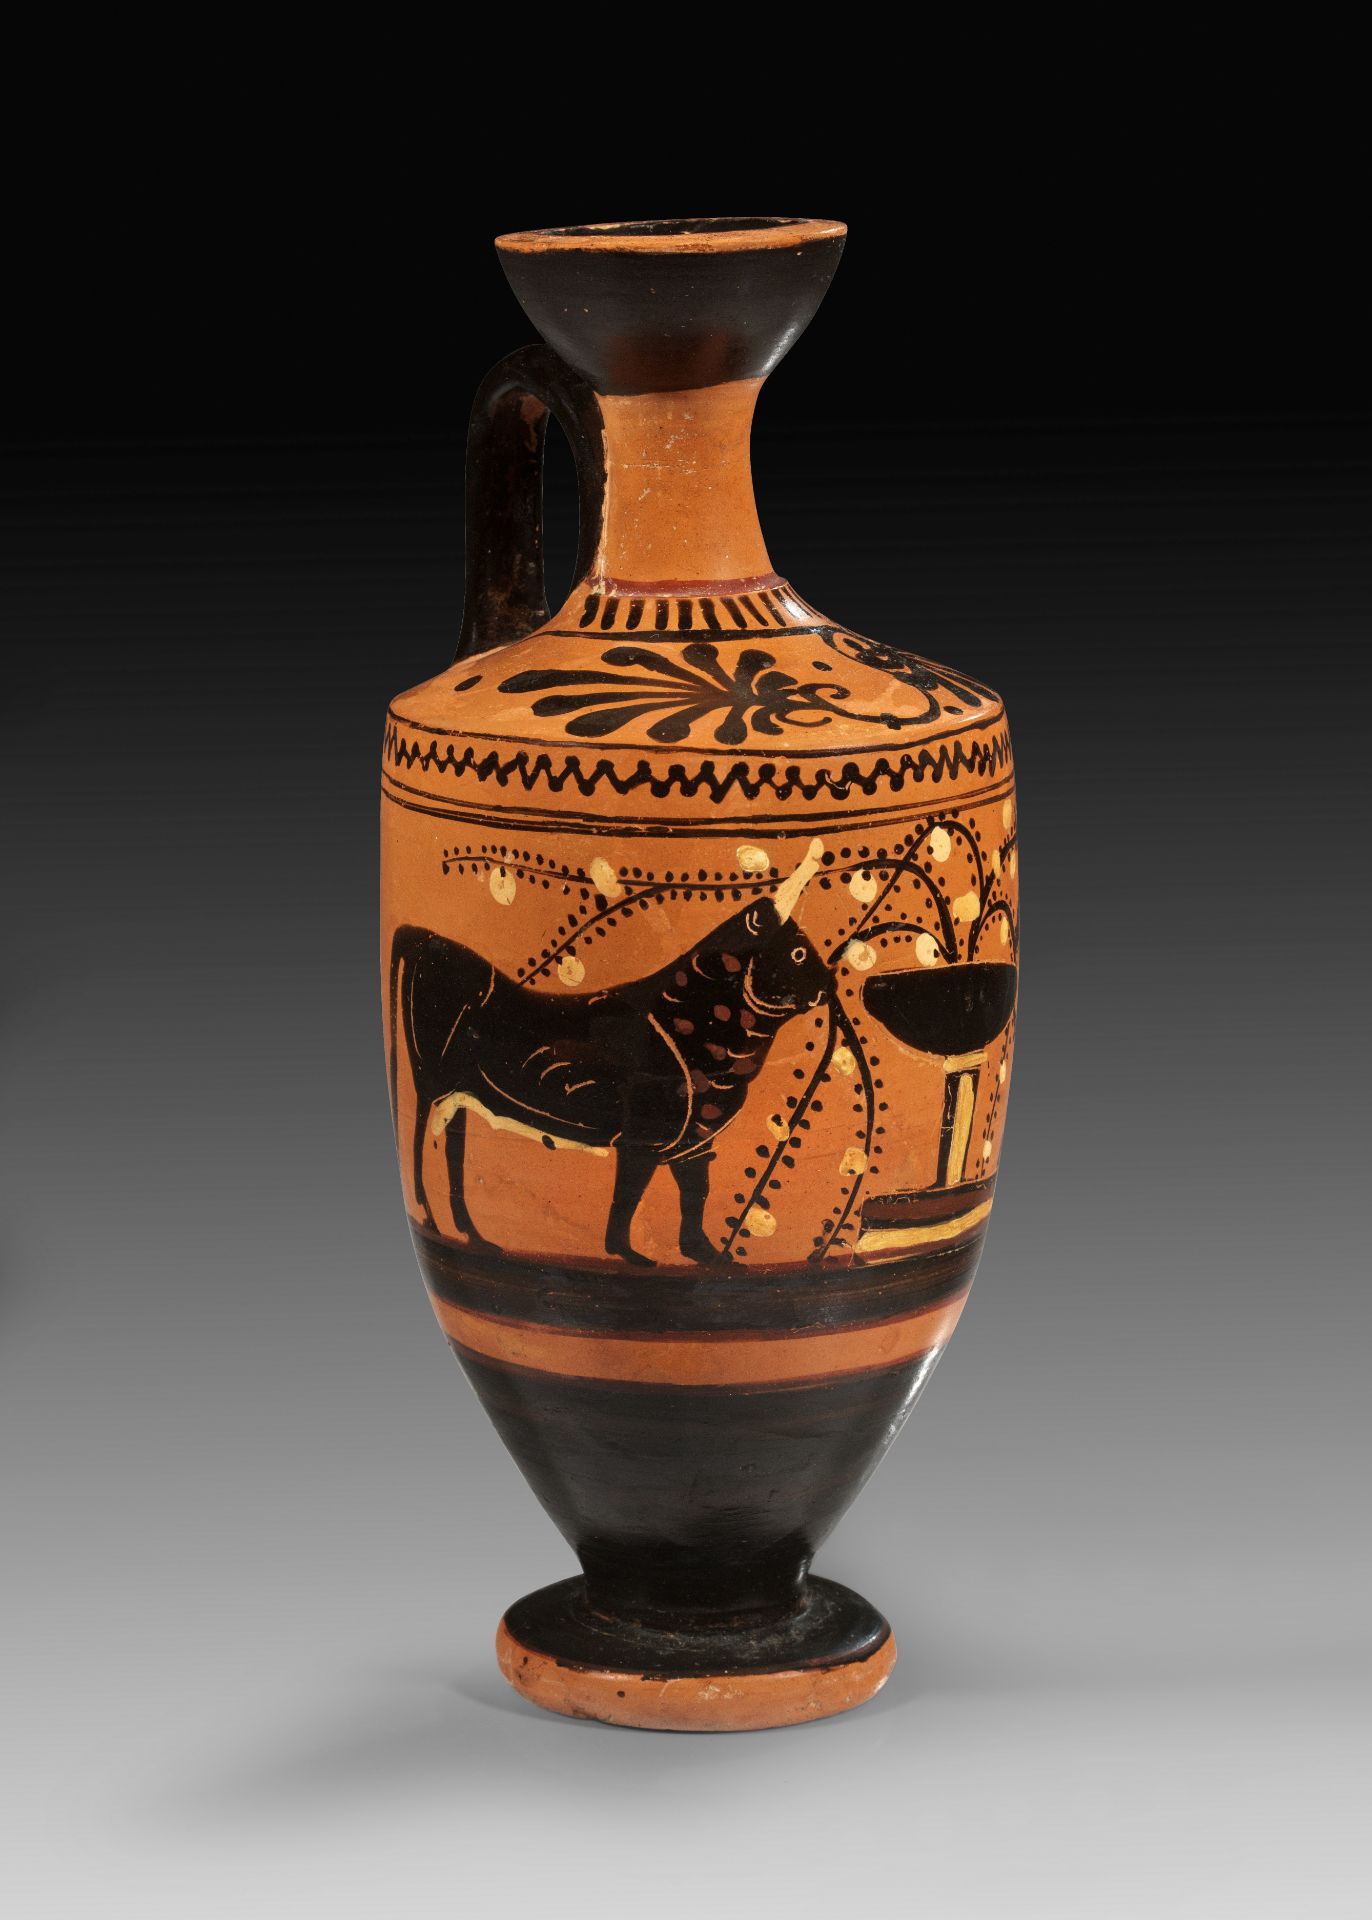 Attic black-figure shoulder lekythos of the Gela Painter.